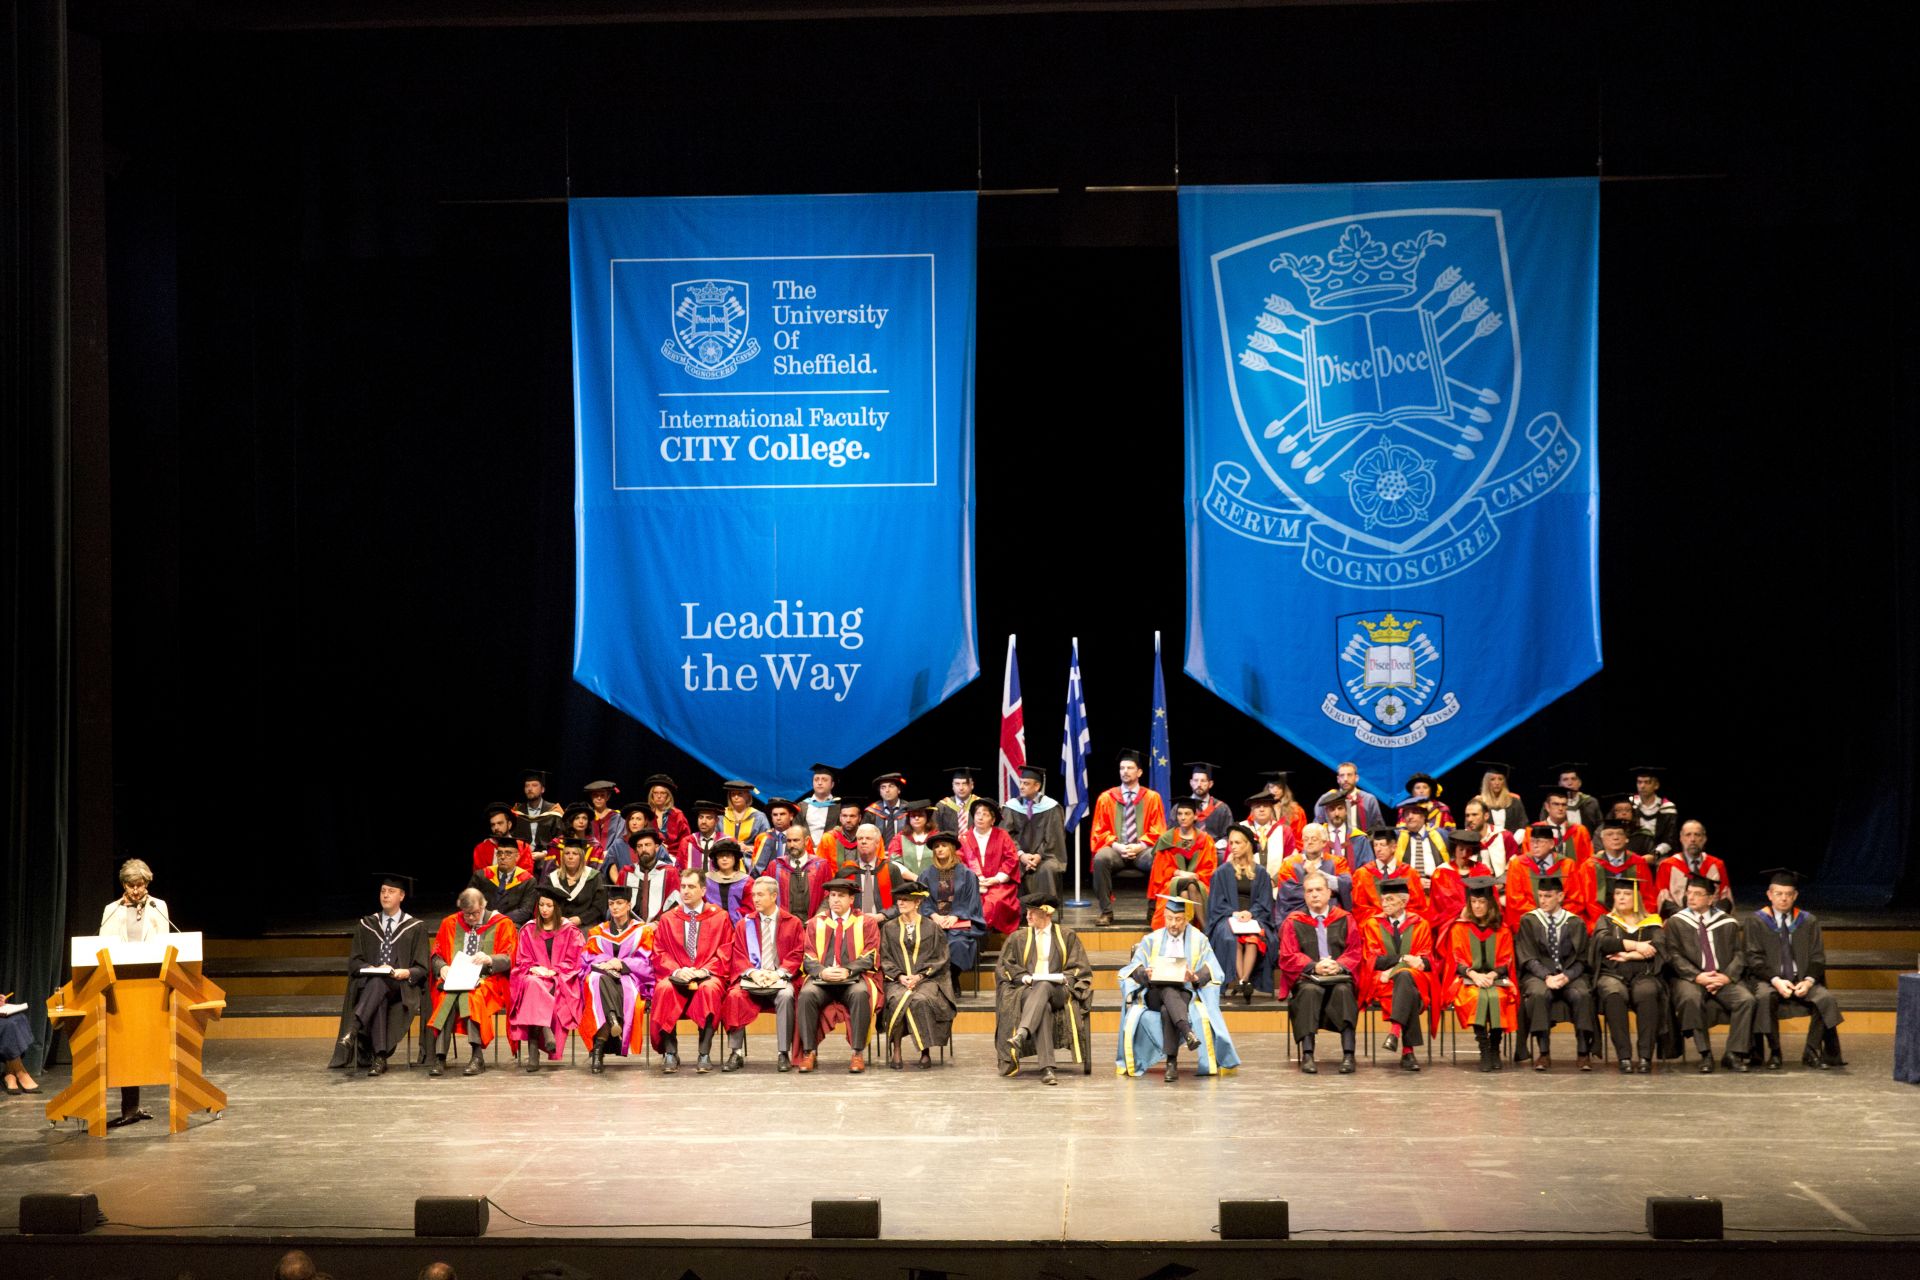 Graduation Ceremony 2018 - The University of Sheffield International Faculty